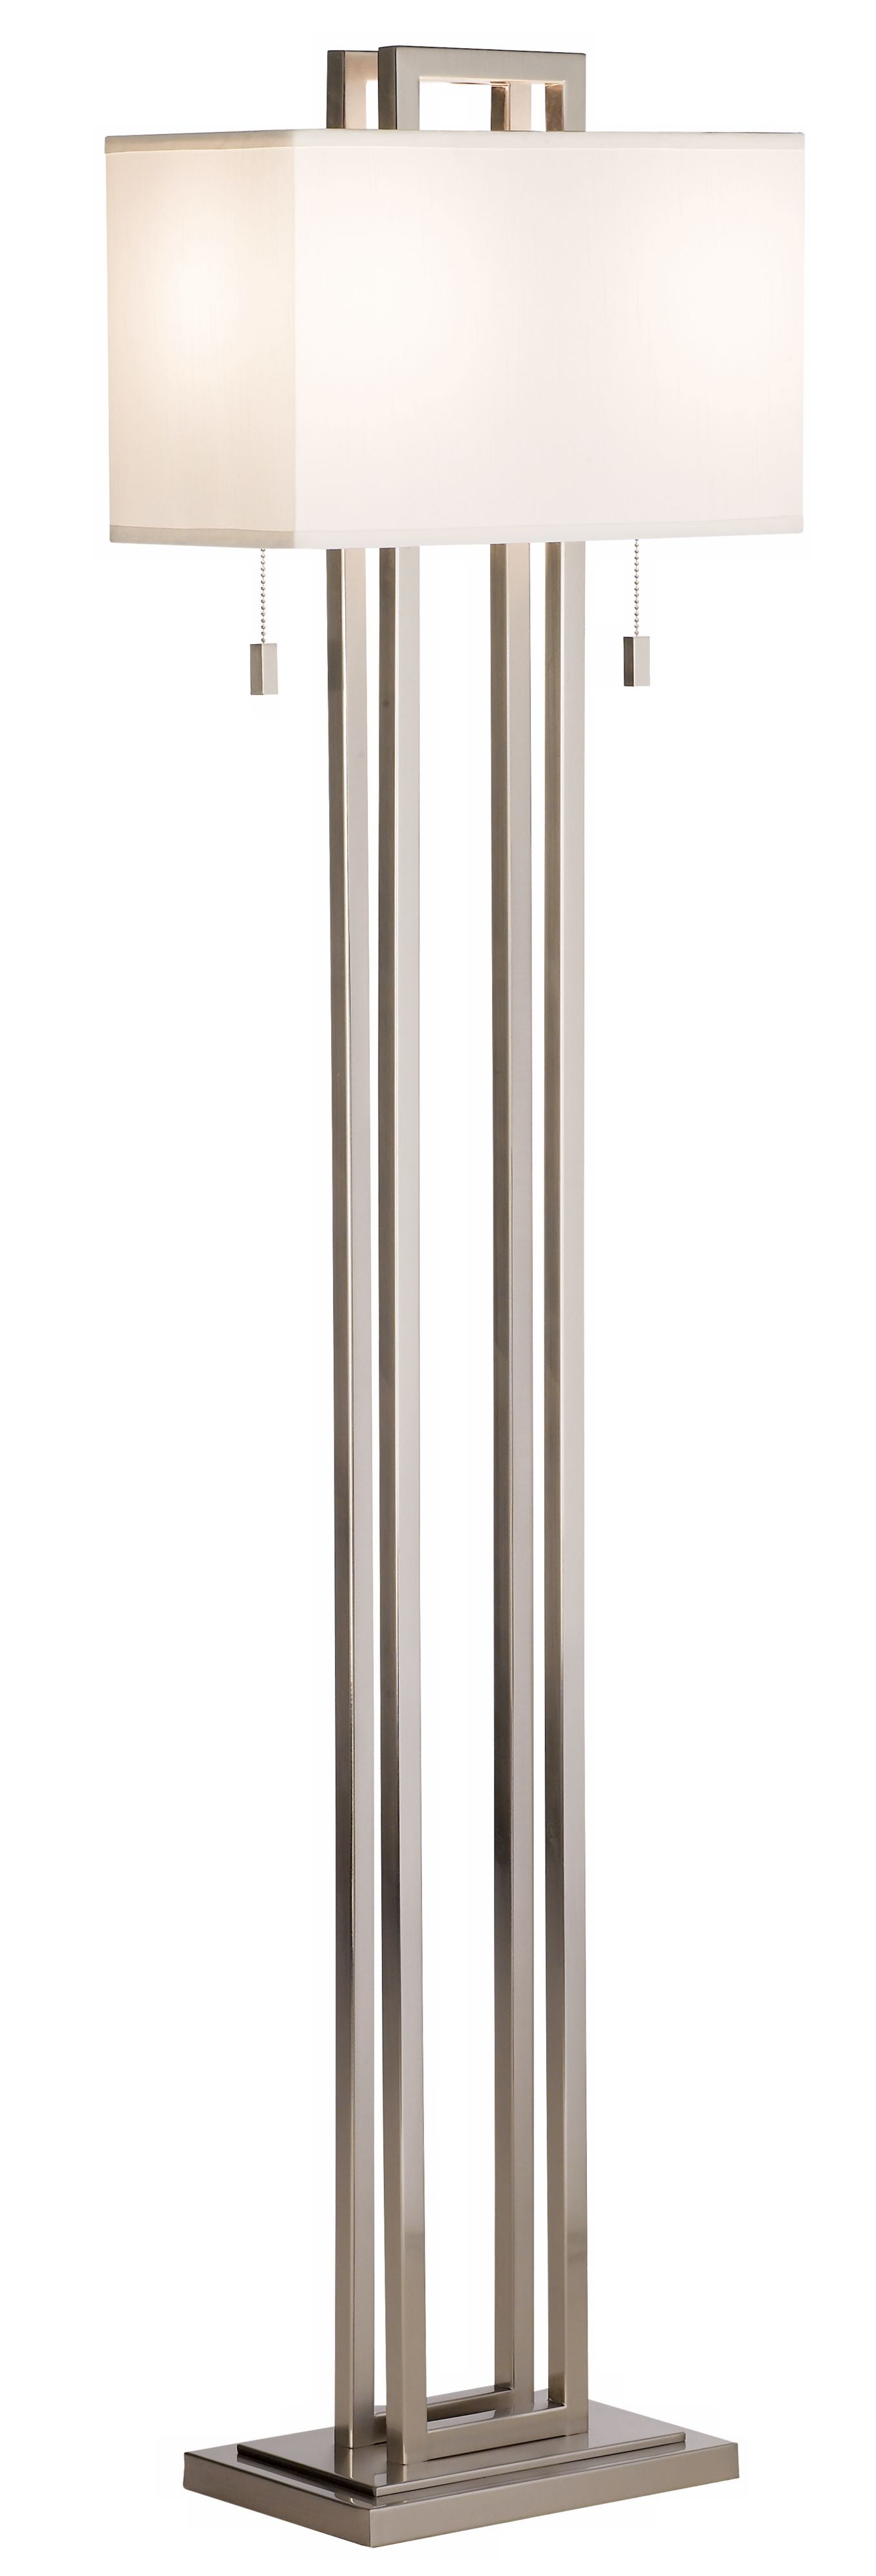 Modern Contemporary Lamp Floor Standing 63.5 Tall Brushed Nickel Silver Black Asymmetry Rectangular White Linen Fabric Shade Decor for Living Room Reading House Bedroom Home Possini Euro Design 